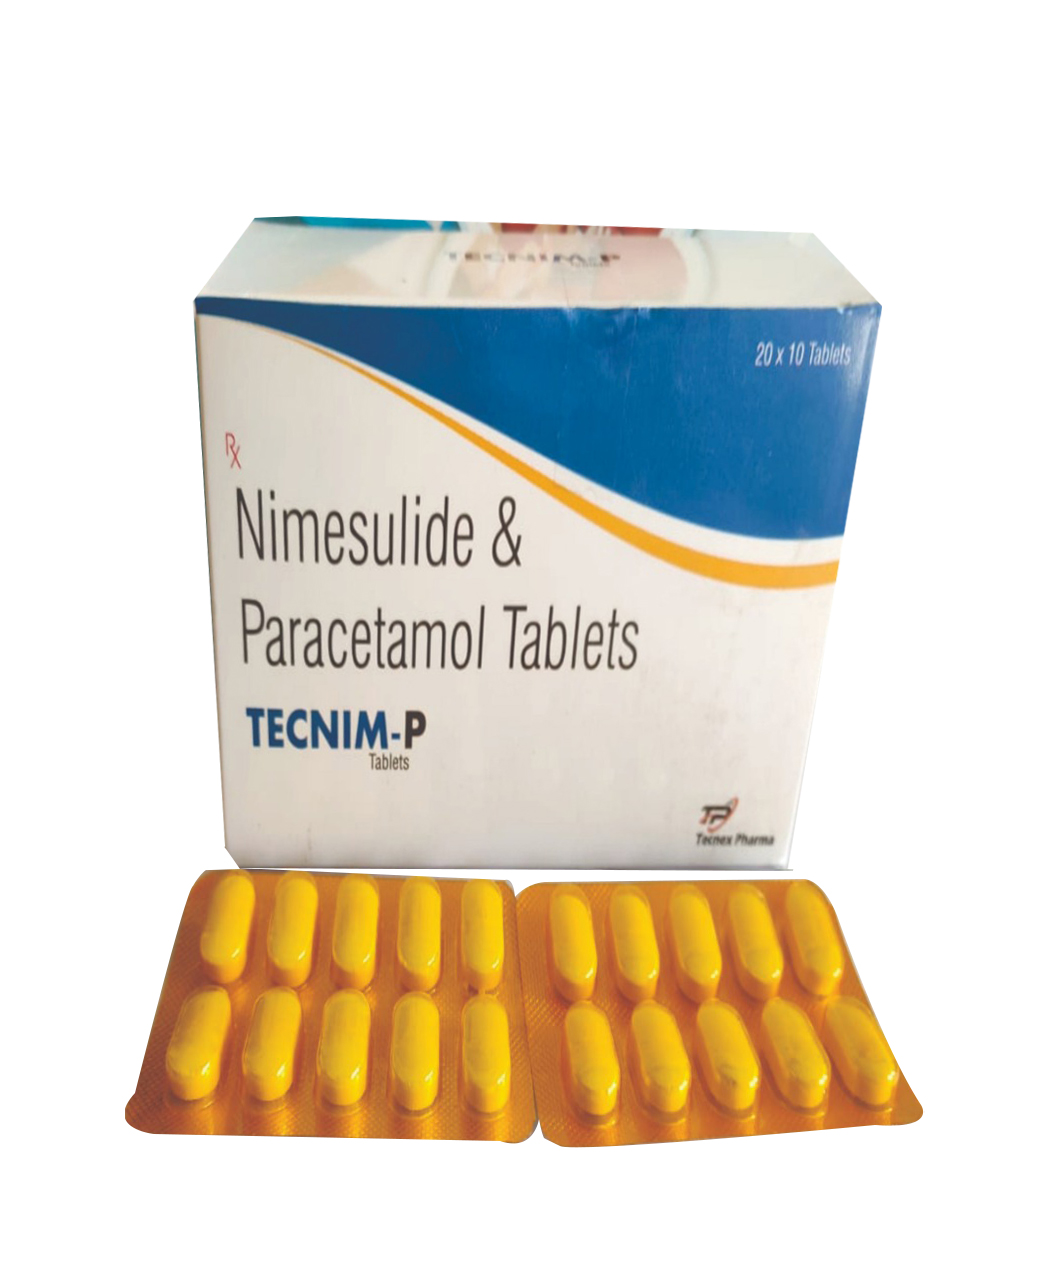 Product Name: TECNIM P, Compositions of TECNIM P are Nimesulide & Paracetamol Tablets - Tecnex Pharma